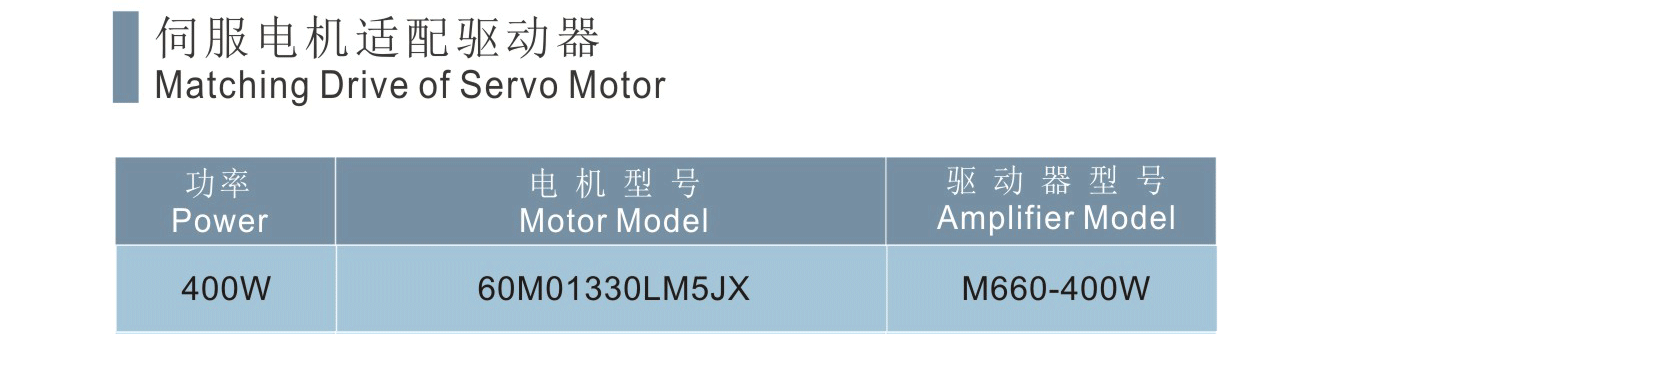 M660-400W_联轴器种类-广州菱科自动化设备有限公司